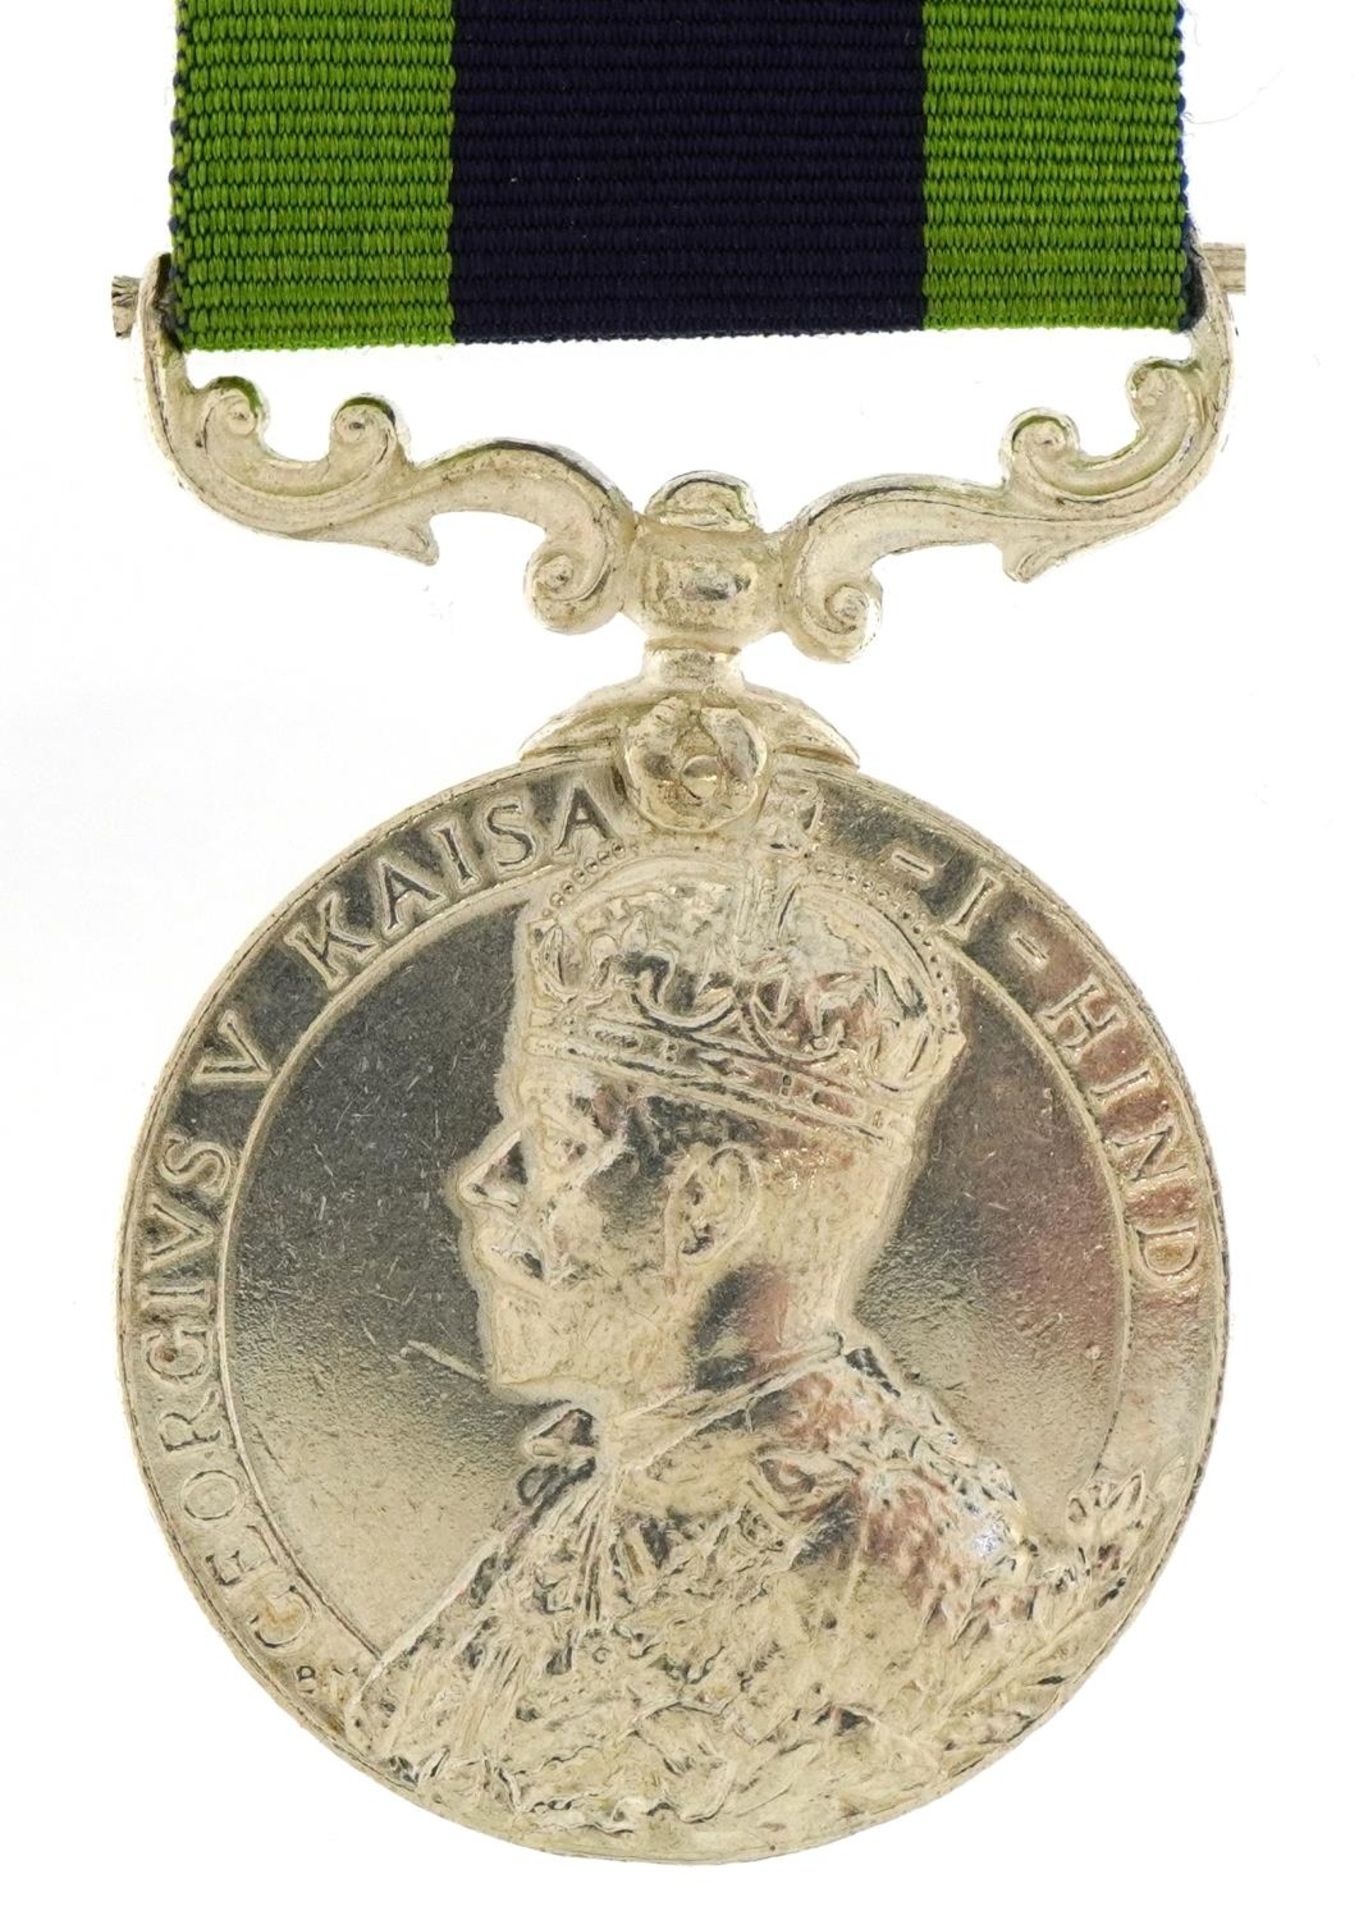 British military George V India General Service medal awarded to 2727SEP.MUNSHI KHAN.3-1.PUNJAB I